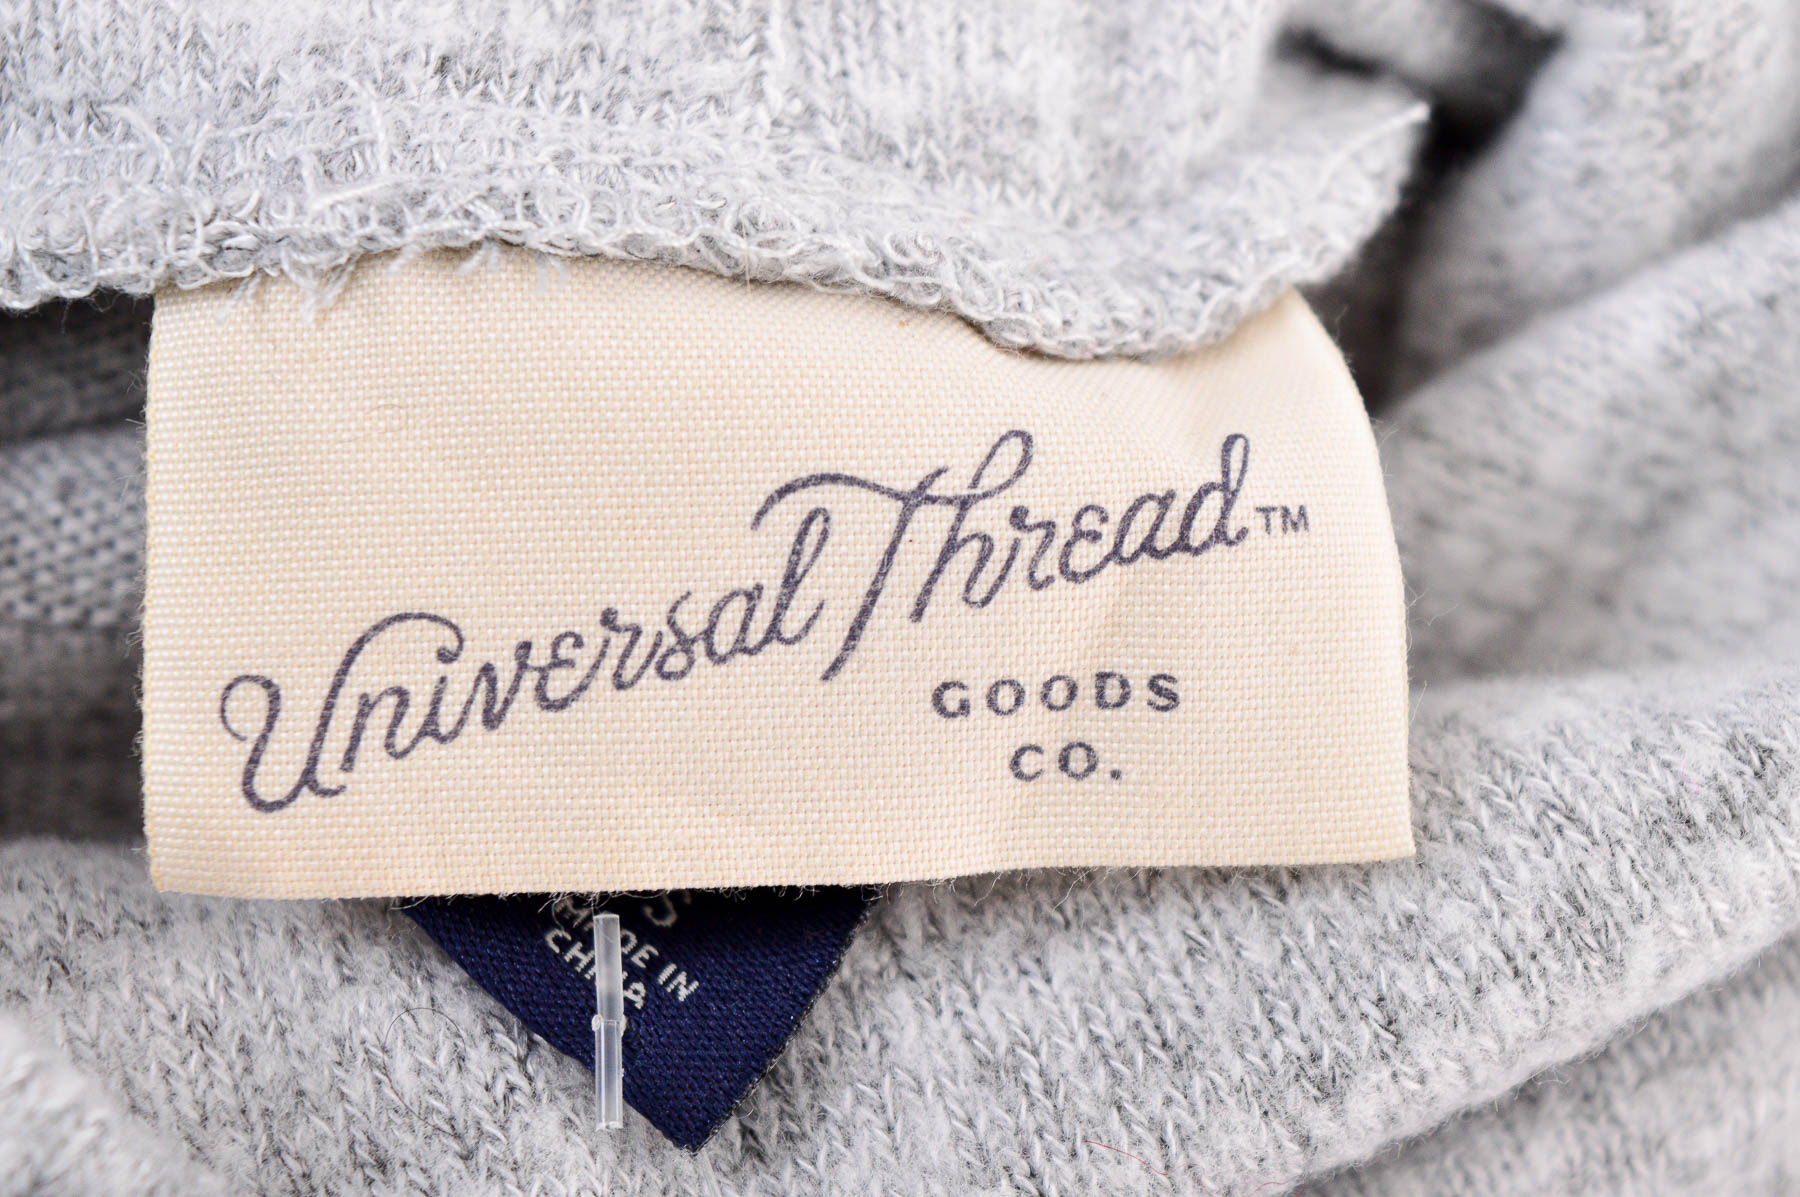 Sweter damski - Universal Thread - 2